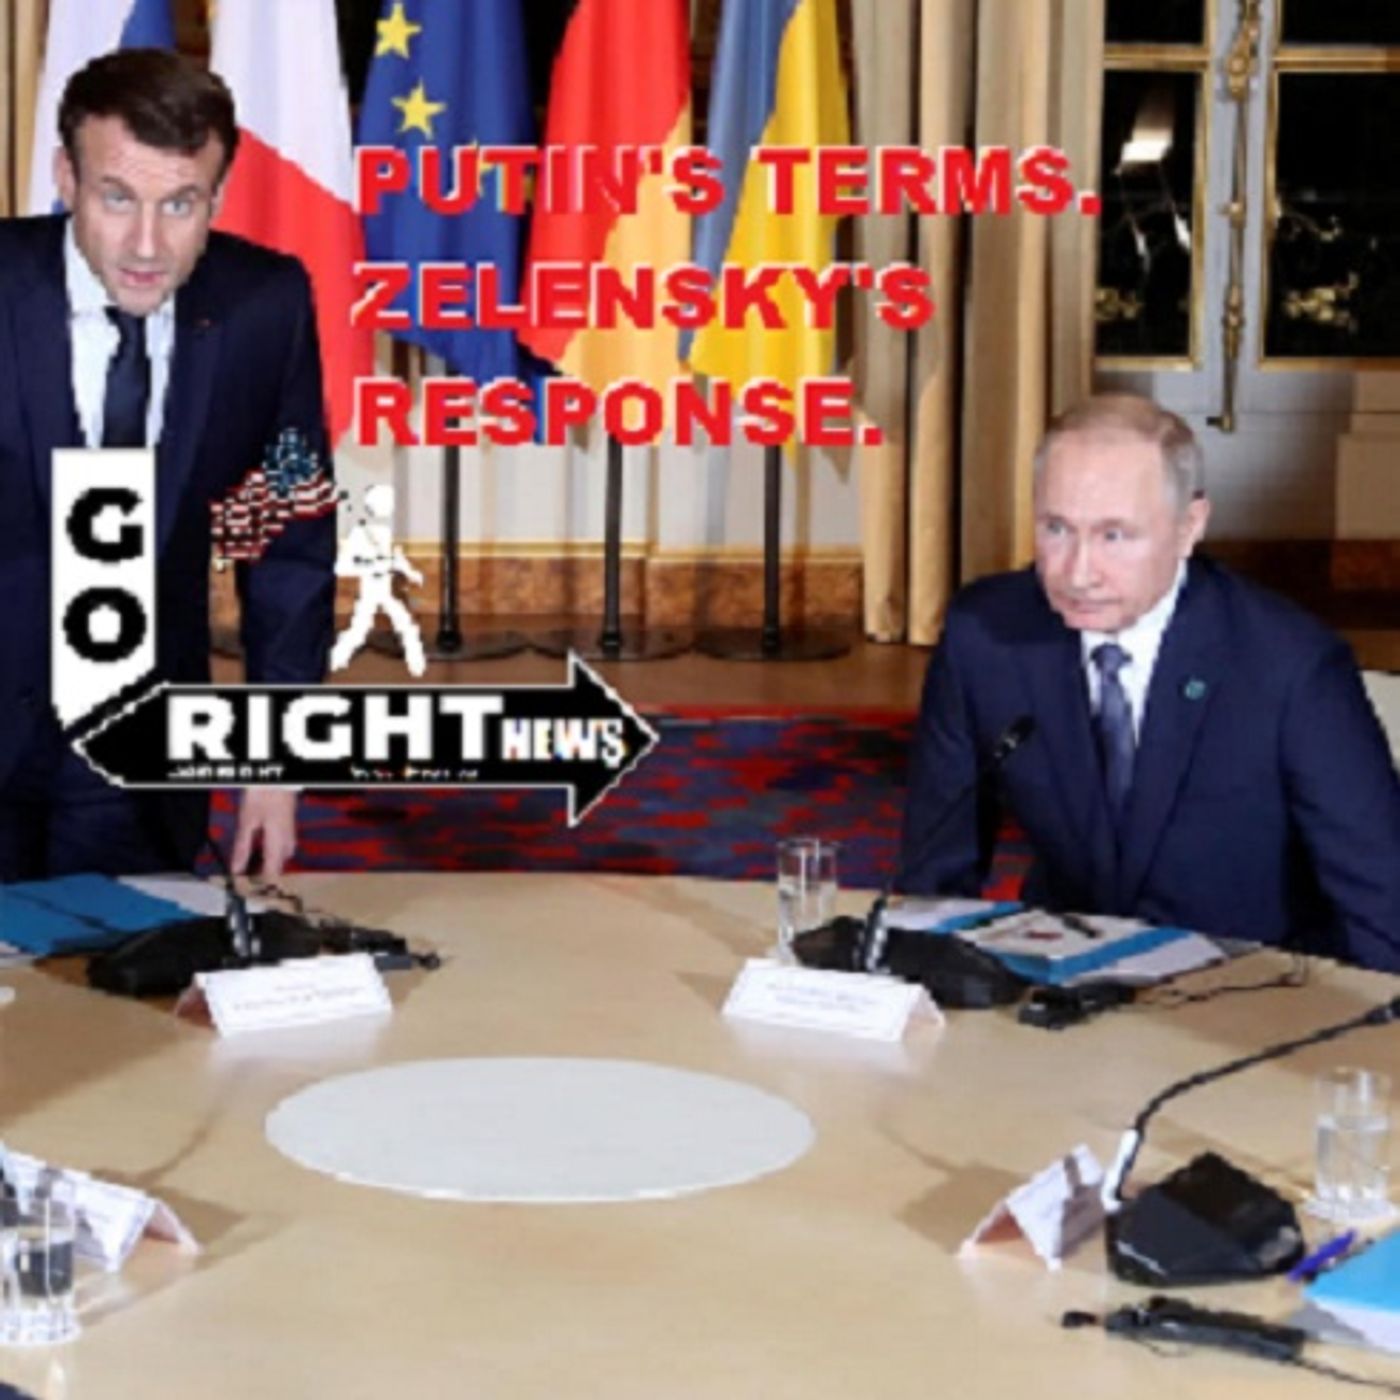 Putins Terms ZELENSKY'S RESPONSE